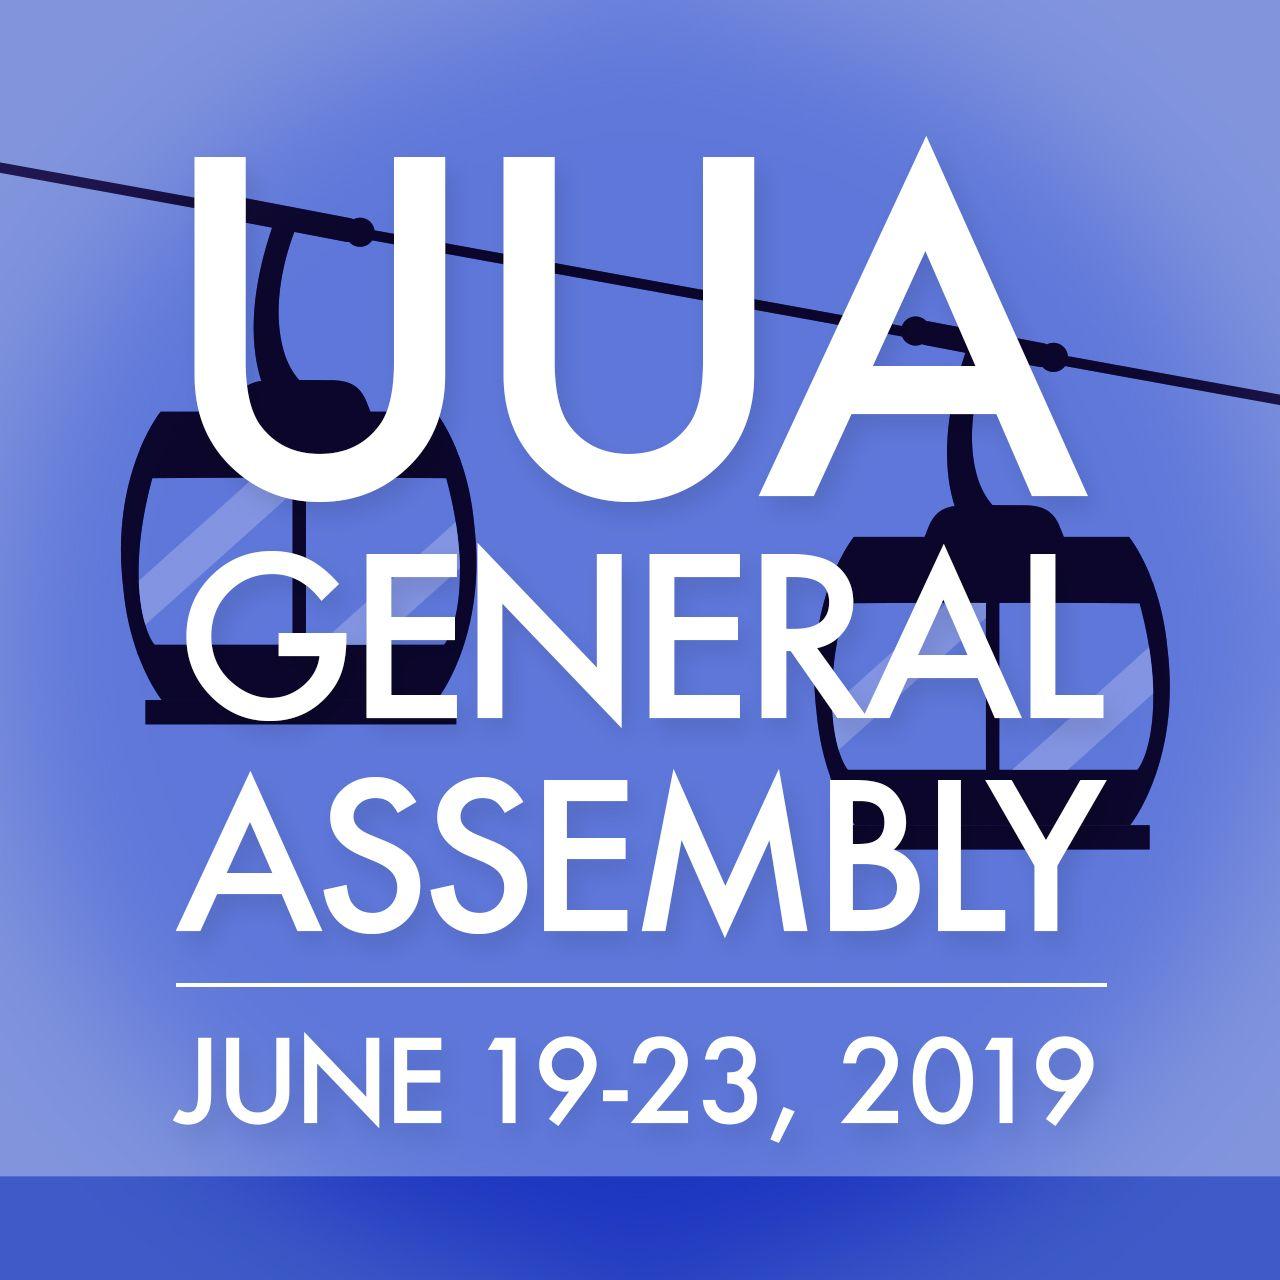 U U of Georgia Logo - General Assembly | UUA.org